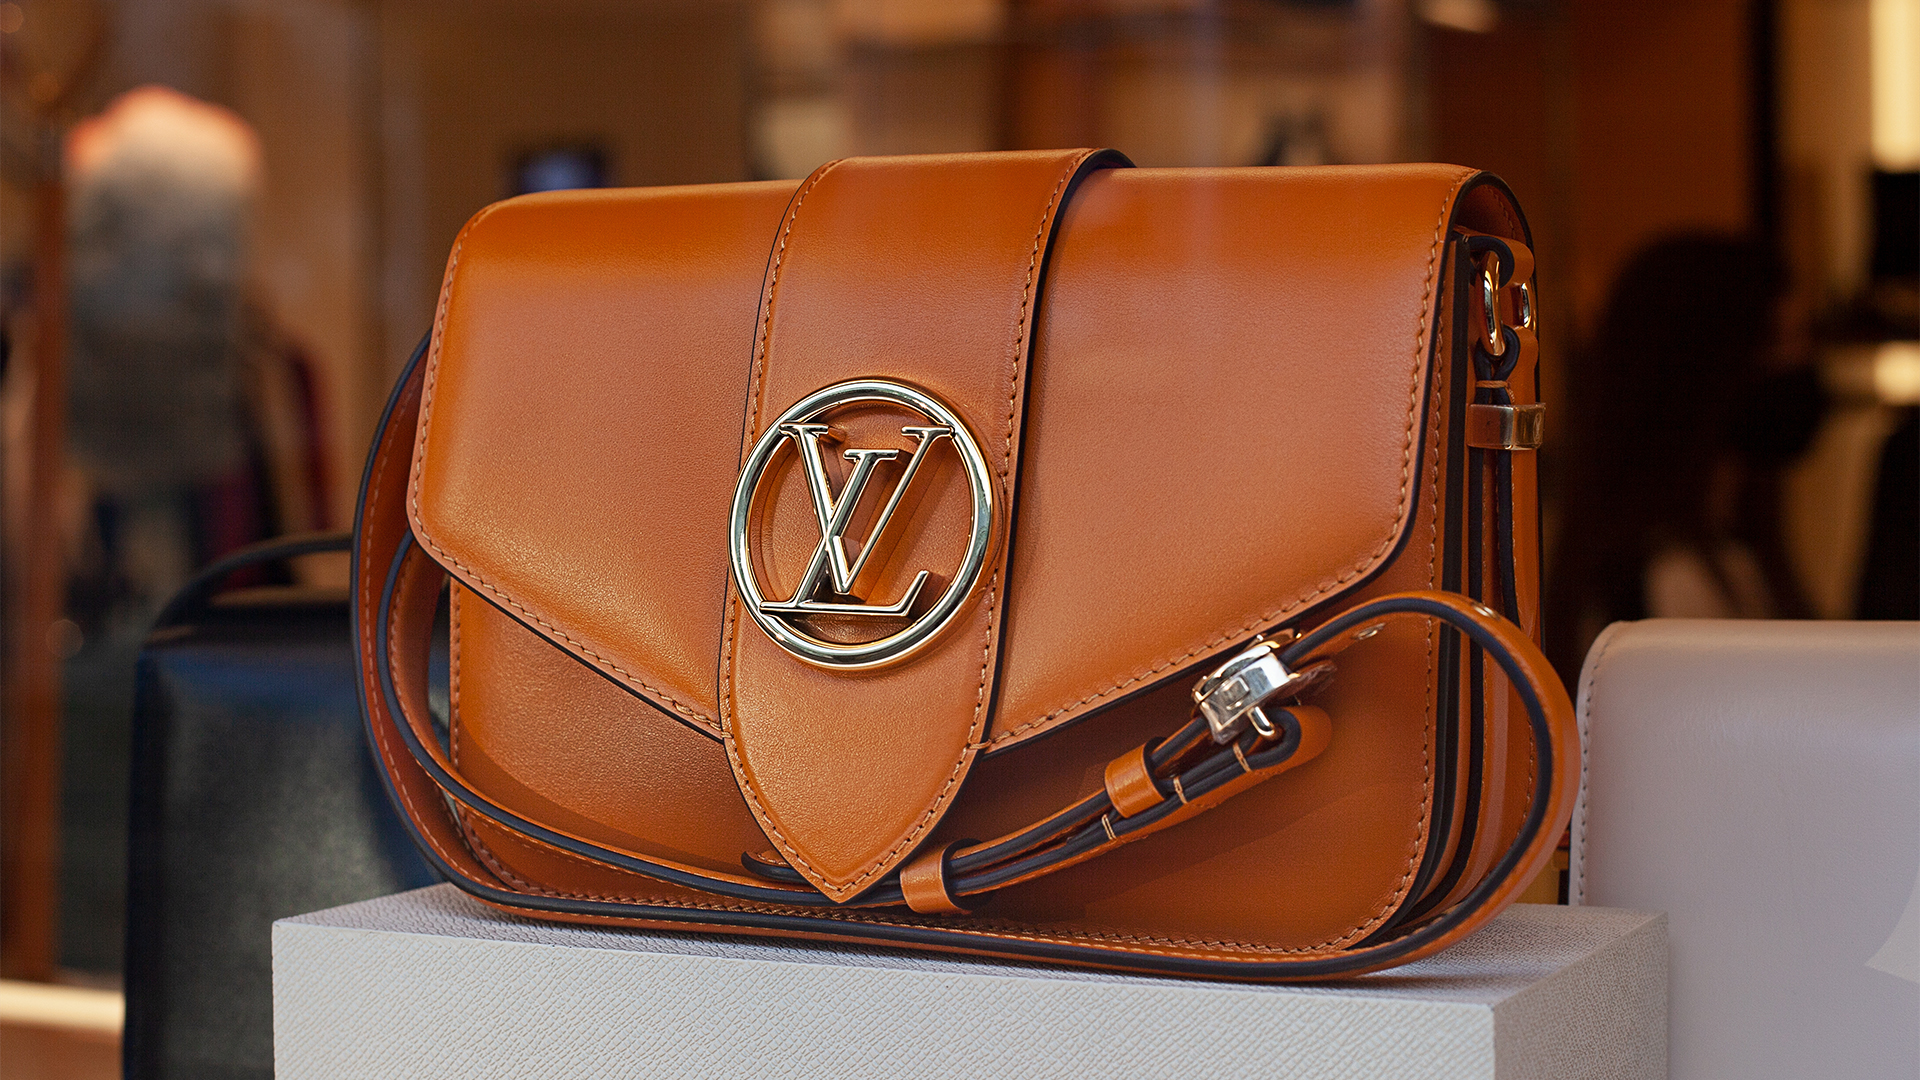 Louis Vuitton Pm Agenda Refill Sizes Charter